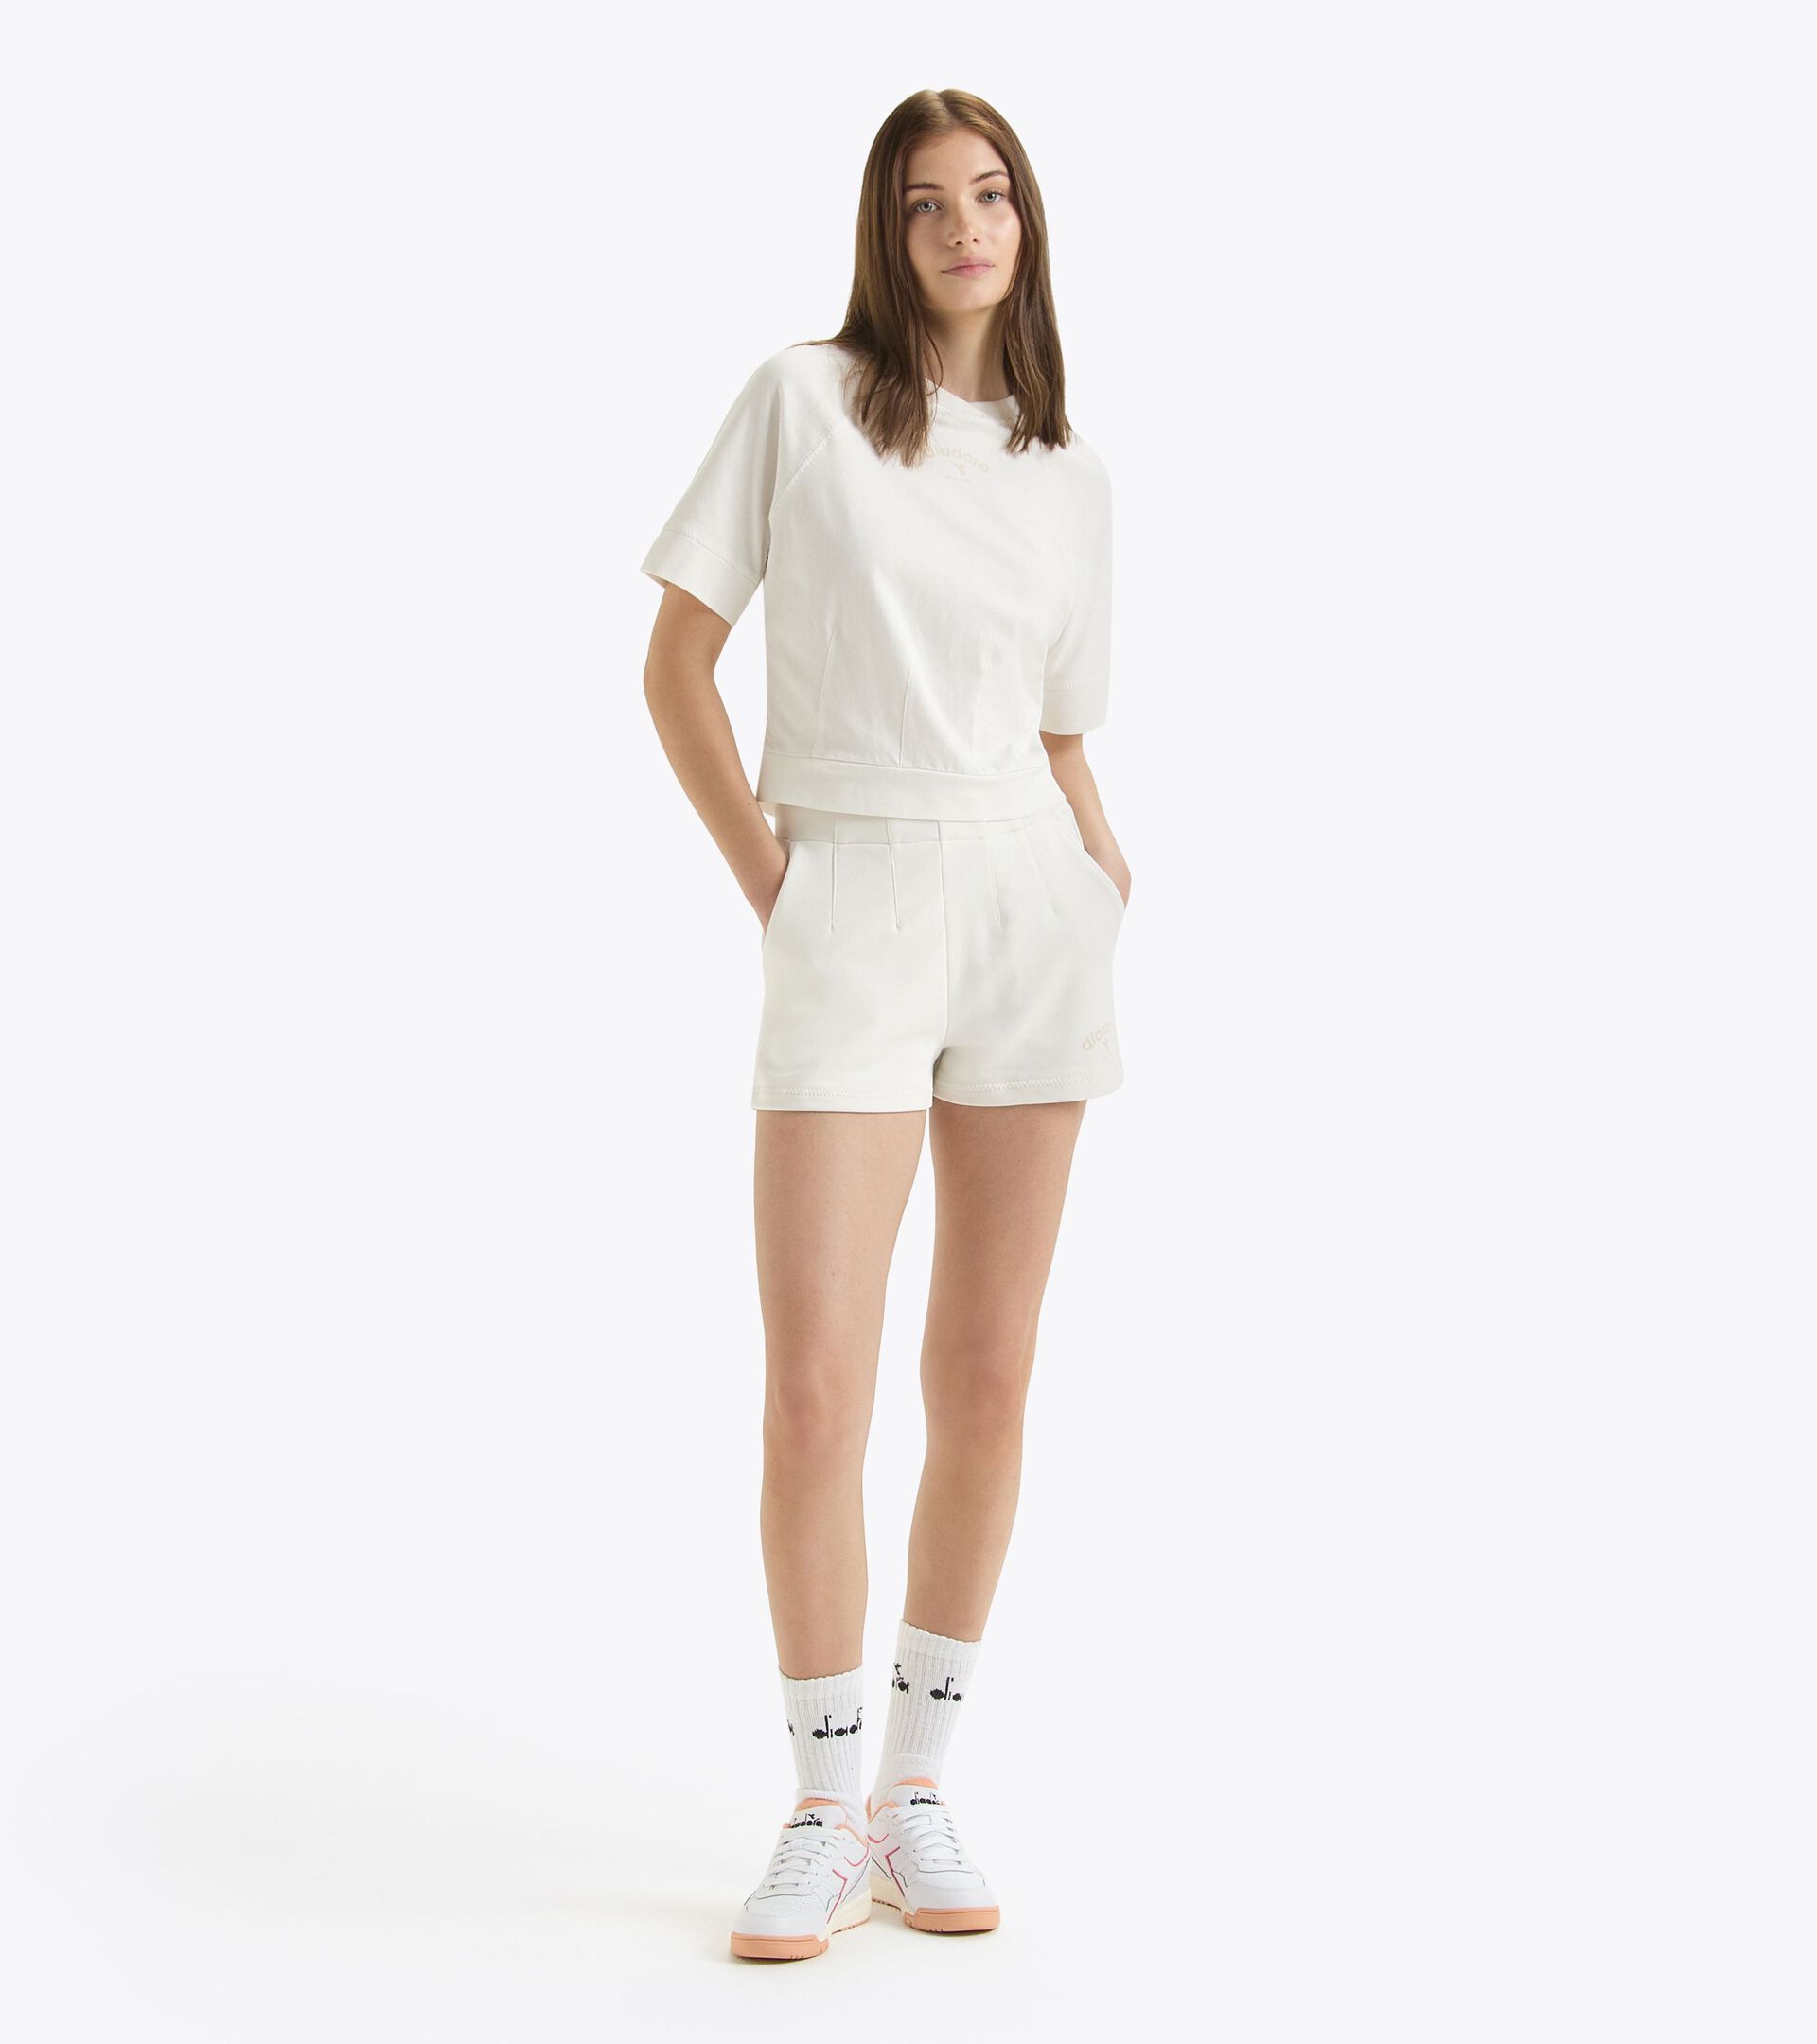 T-shirt with a boxy fit - Women’s L. T-SHIRT SS ATHL. LOGO WHITE MILK - Diadora